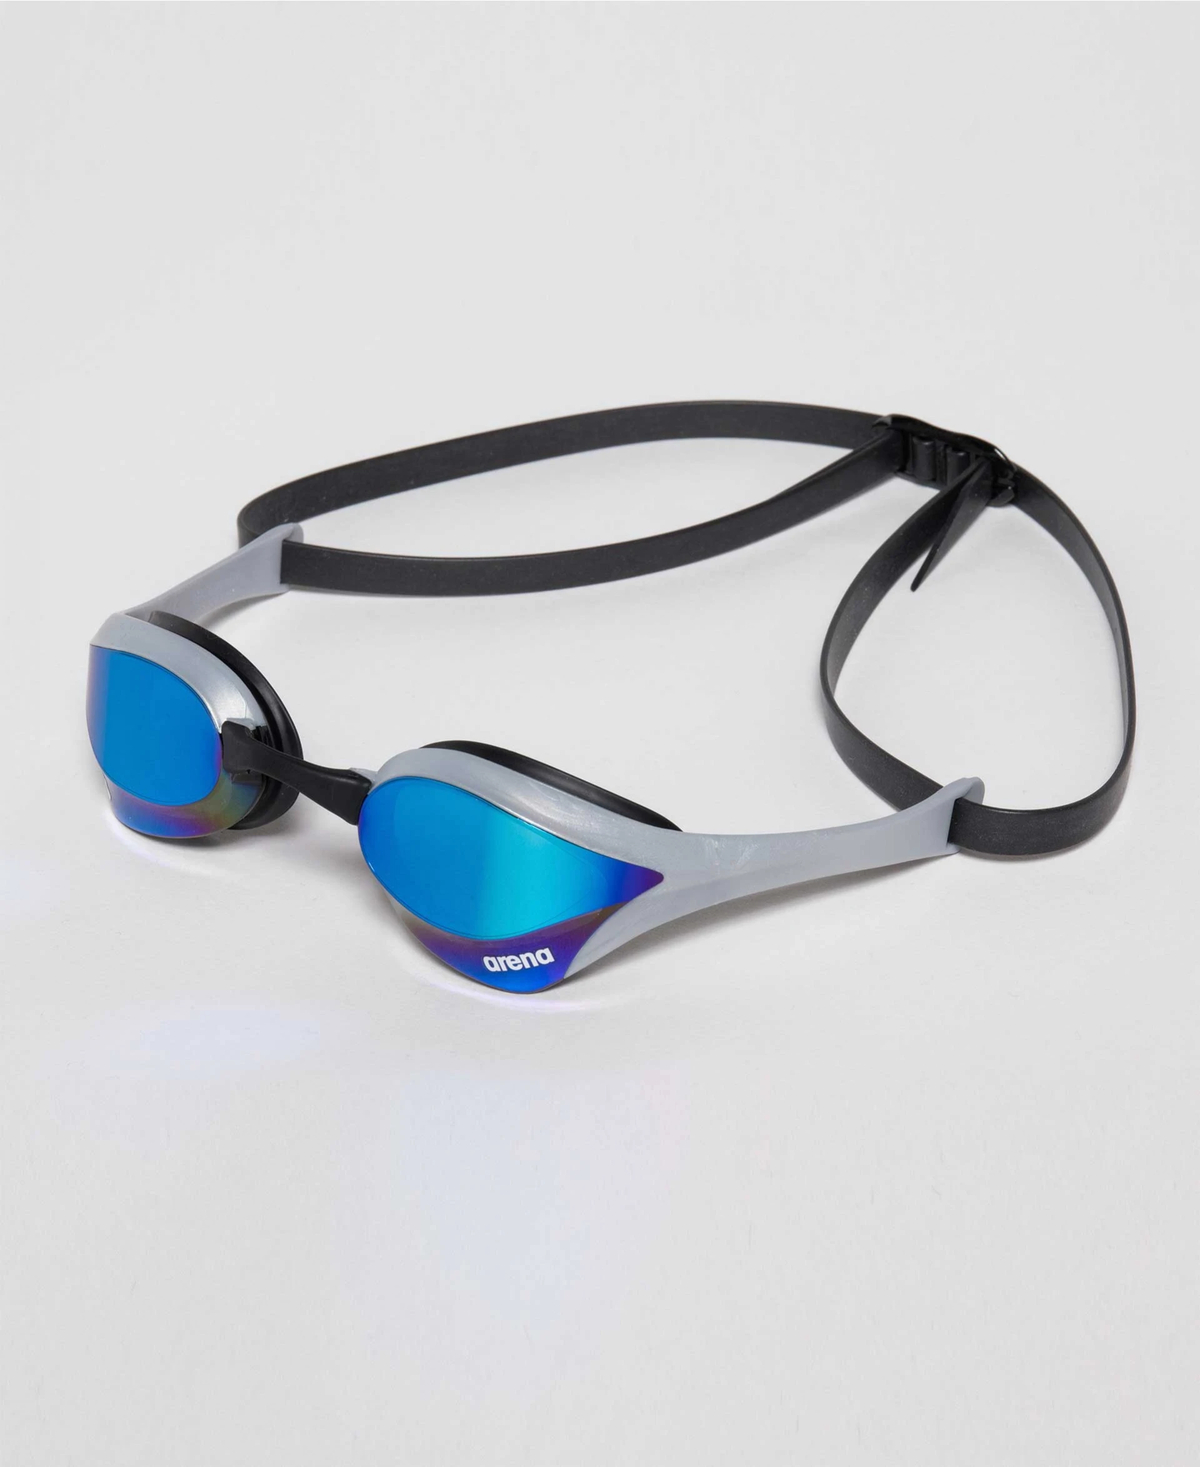 Arena Ultra Swipe Goggles. Arena Cobra Ultra Swipe Mirror Swimming Goggles 